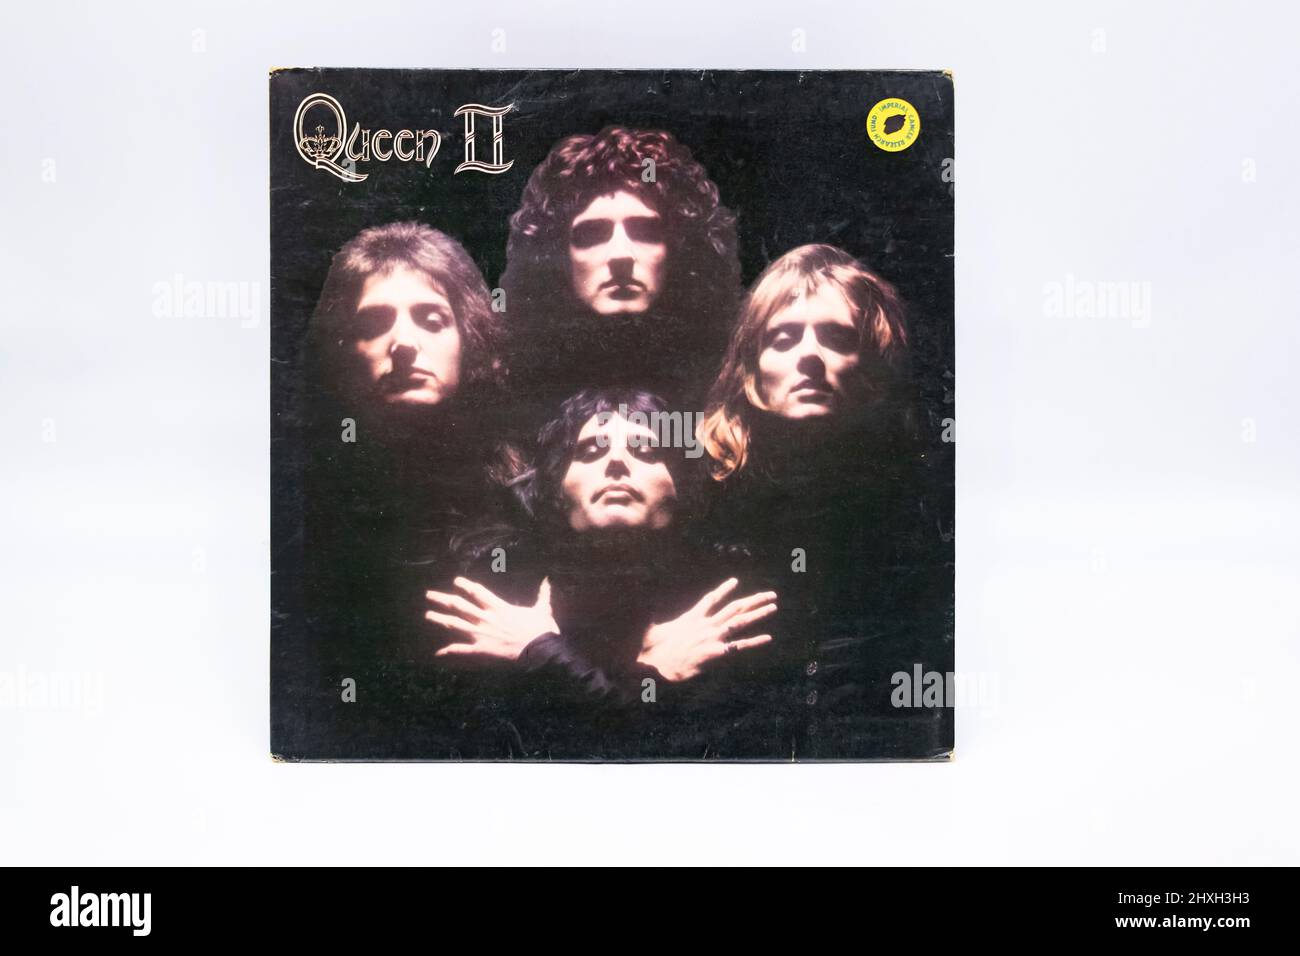 Copertina per dischi in vinile queen II LP Foto stock - Alamy